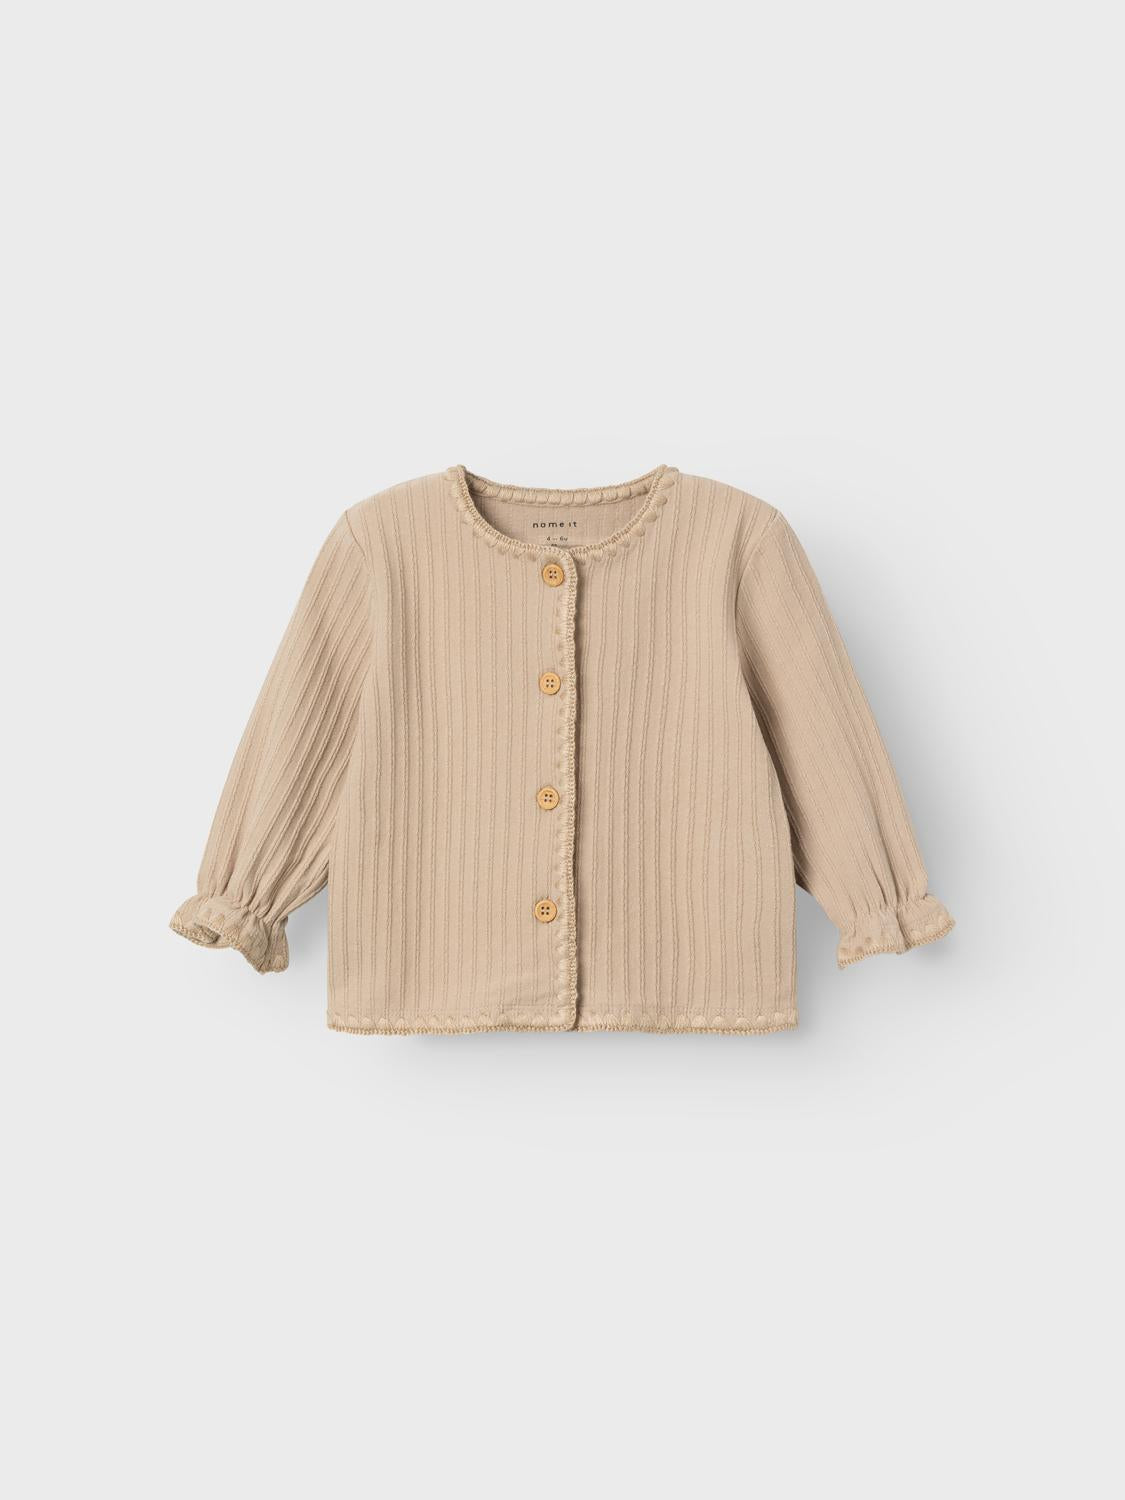 NBFOFINNE Sweatshirts - Oxford Tan